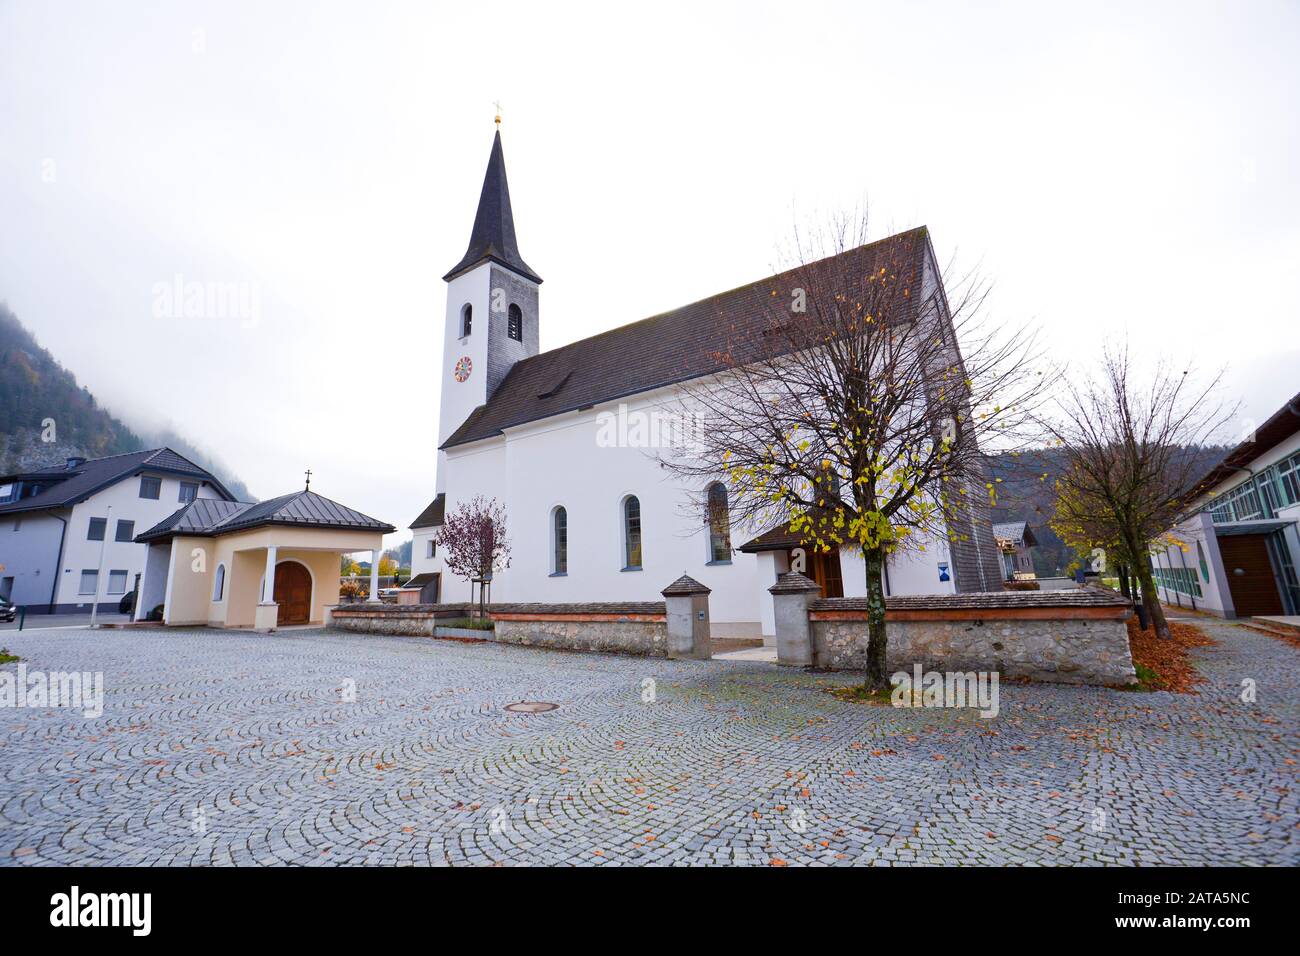 Pfarramt church at Fuschl am See, Austria.  It's romantic small towns in Europe. Stock Photo